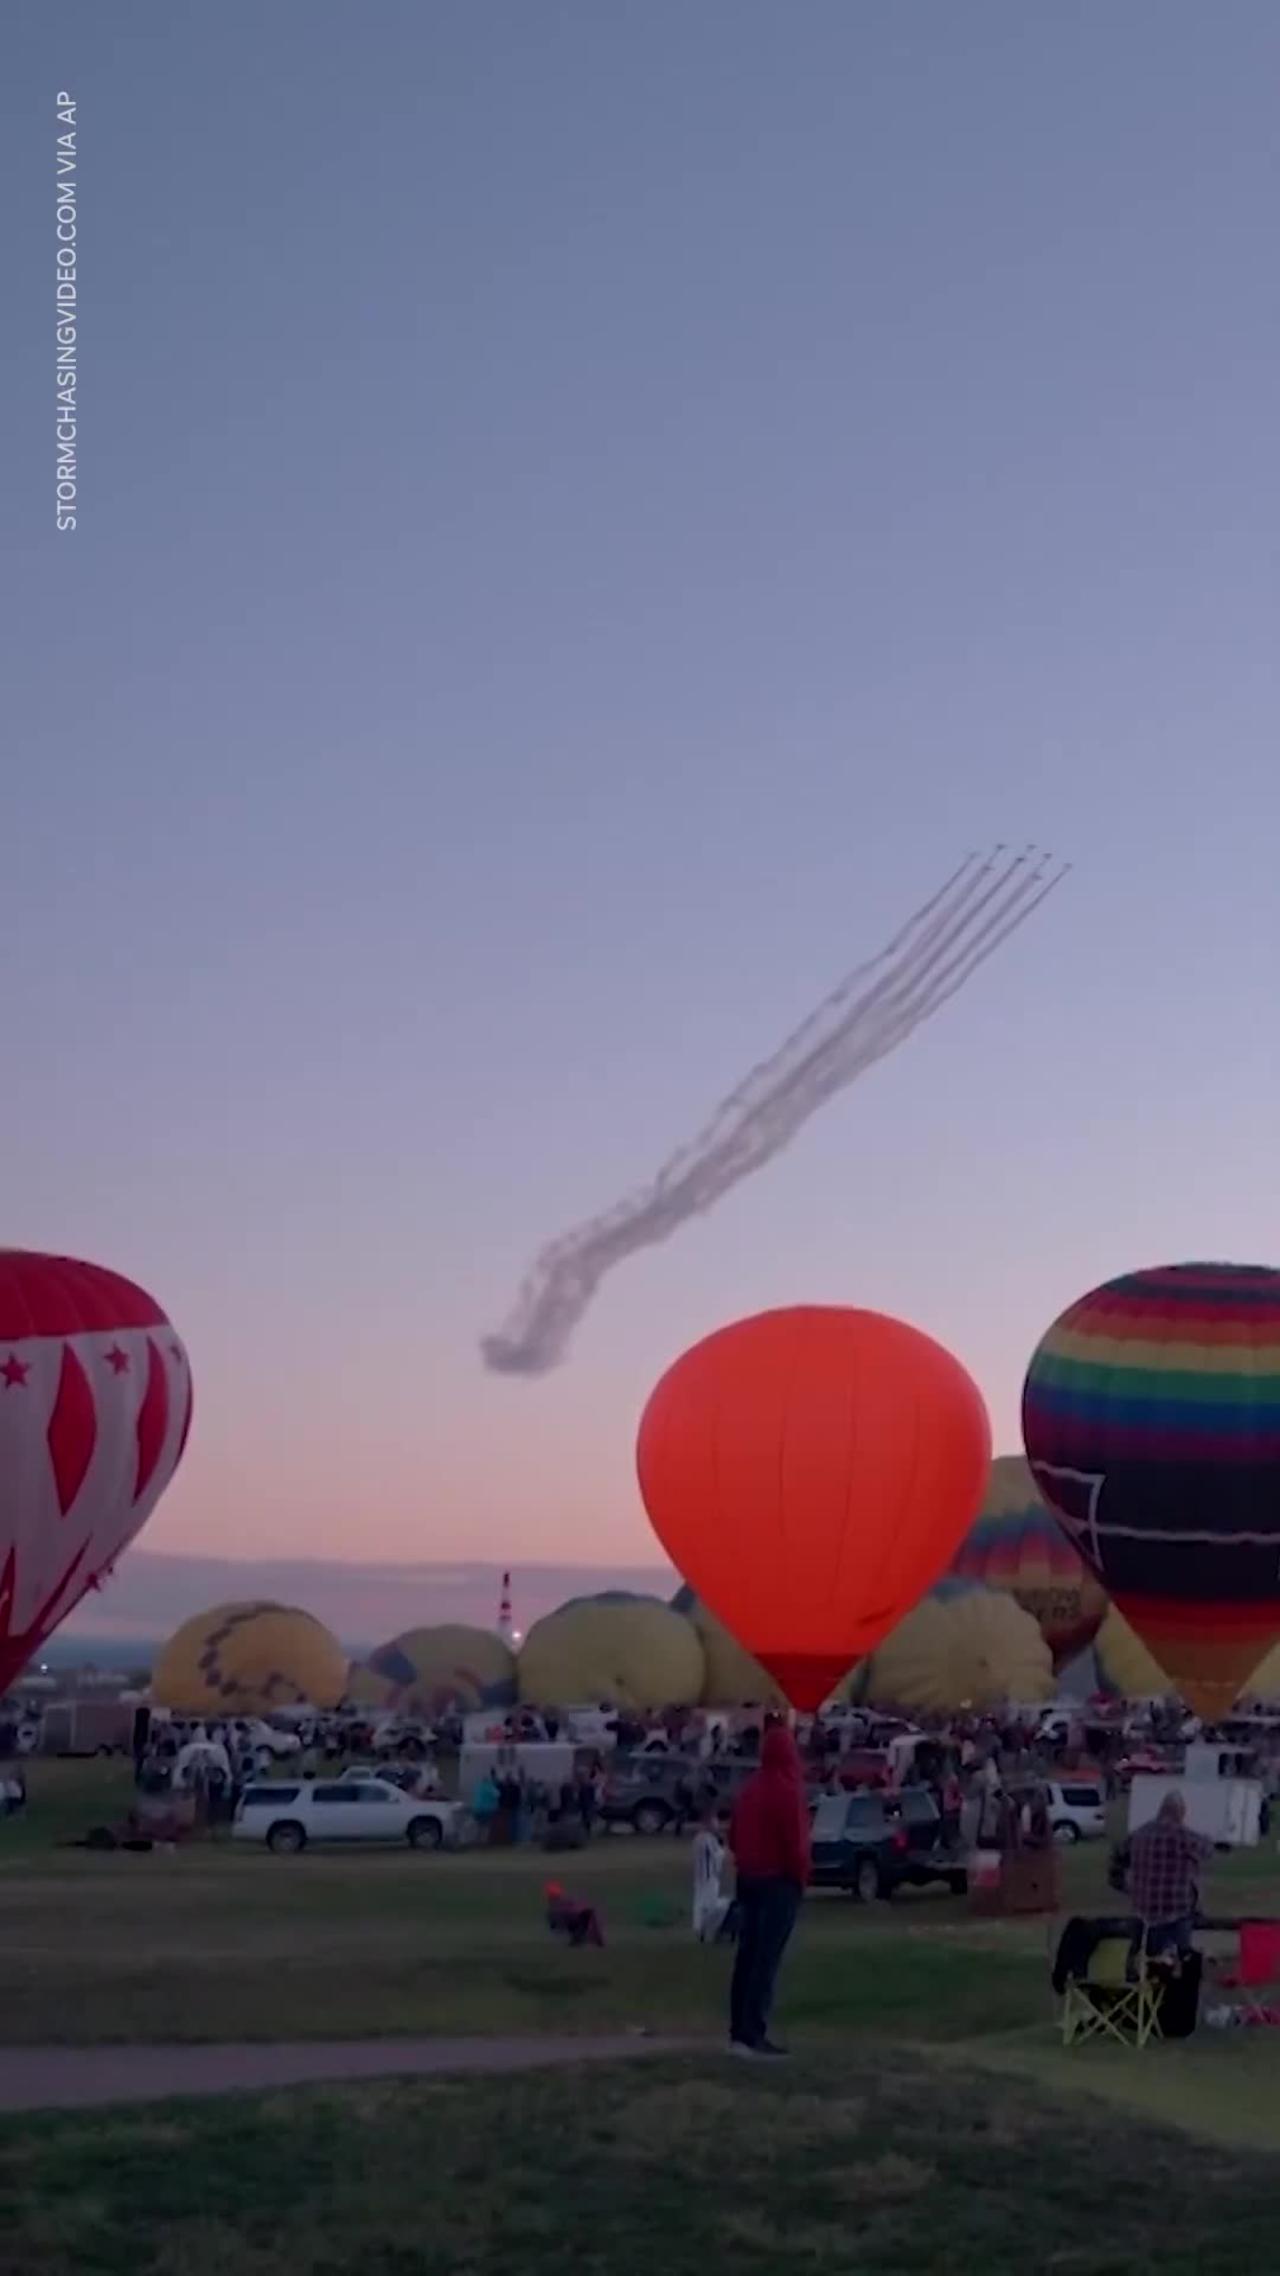 Albuquerque's International Balloon Fiesta celebrates 50th anniversary